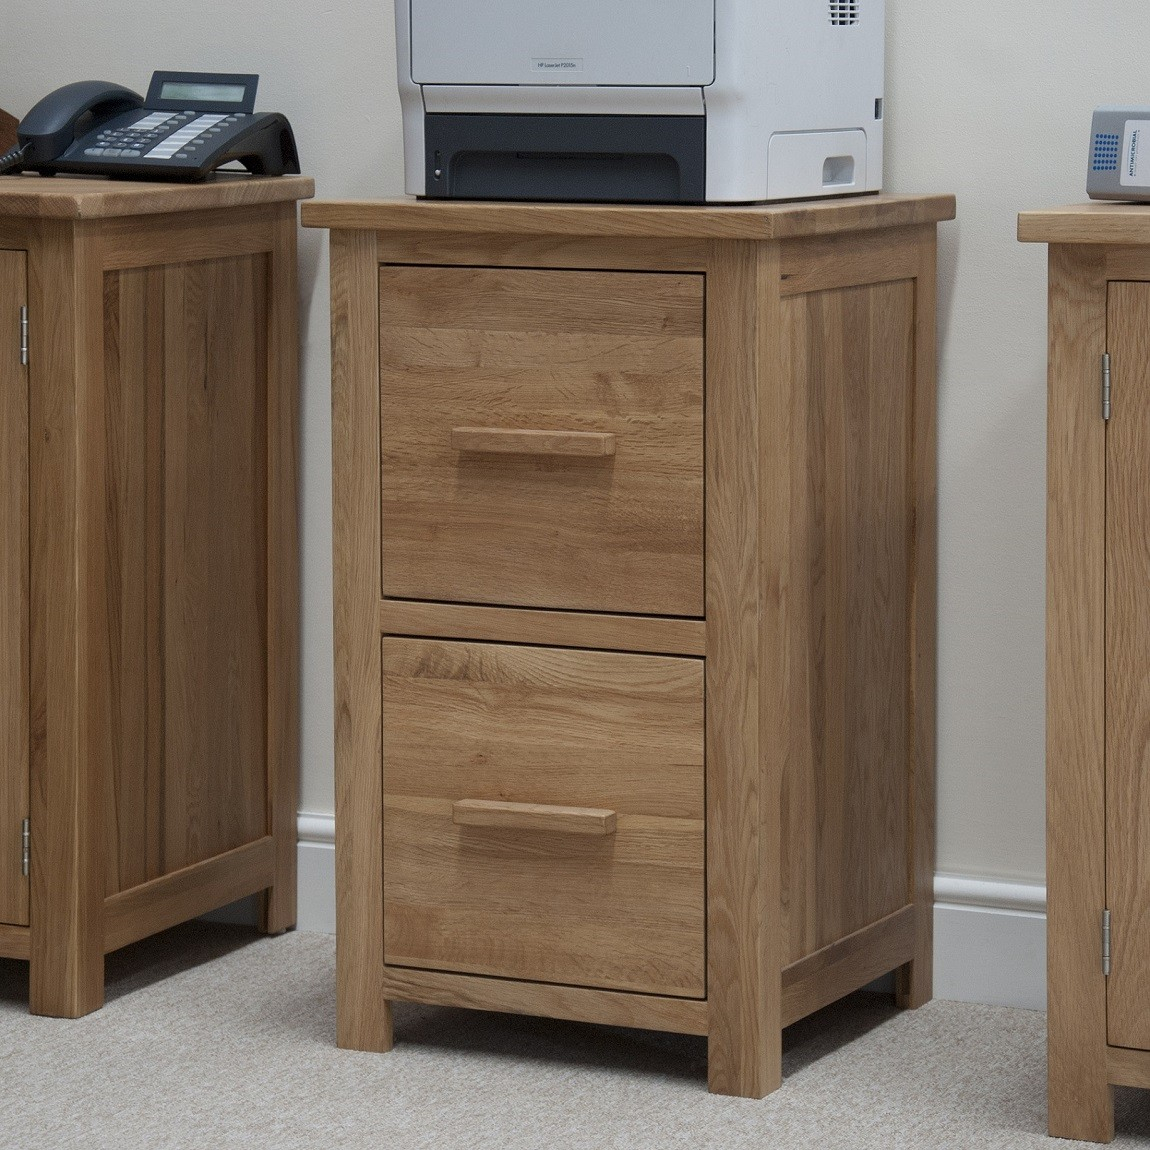 Opus Solid Oak Filing Cabinet Oak Furniture Uk with regard to dimensions 1150 X 1150